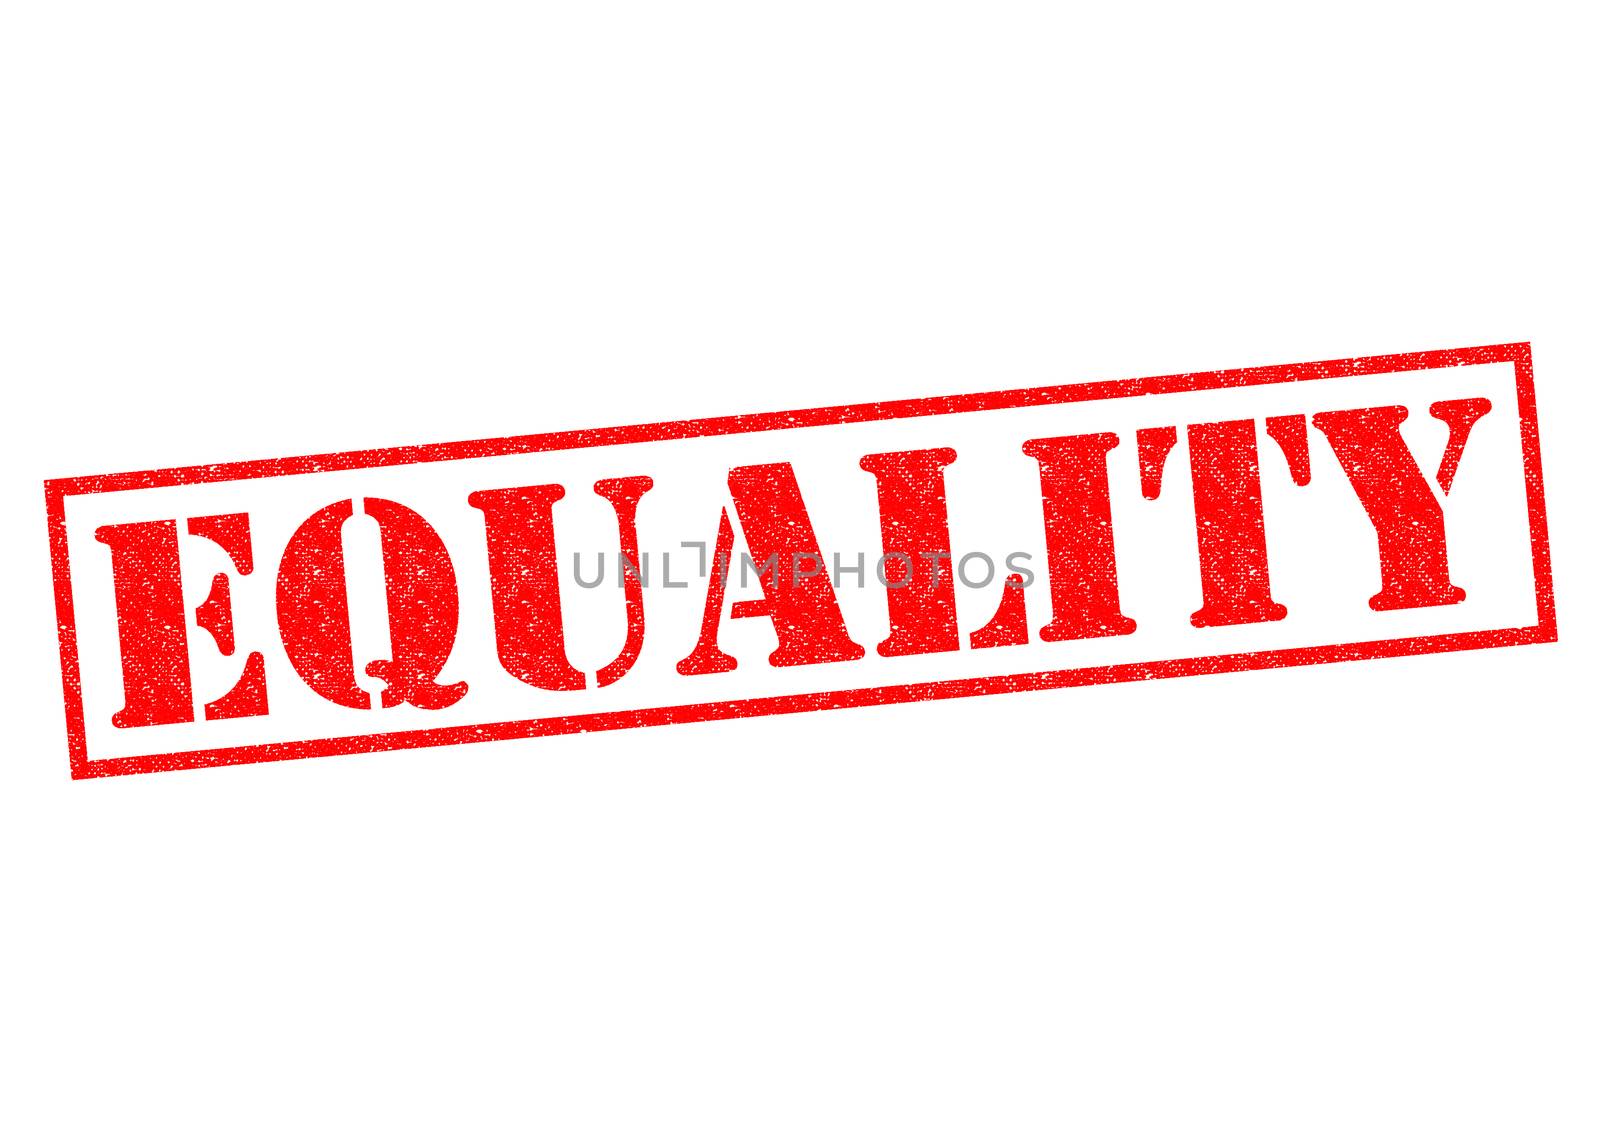 EQUALITY by chrisdorney